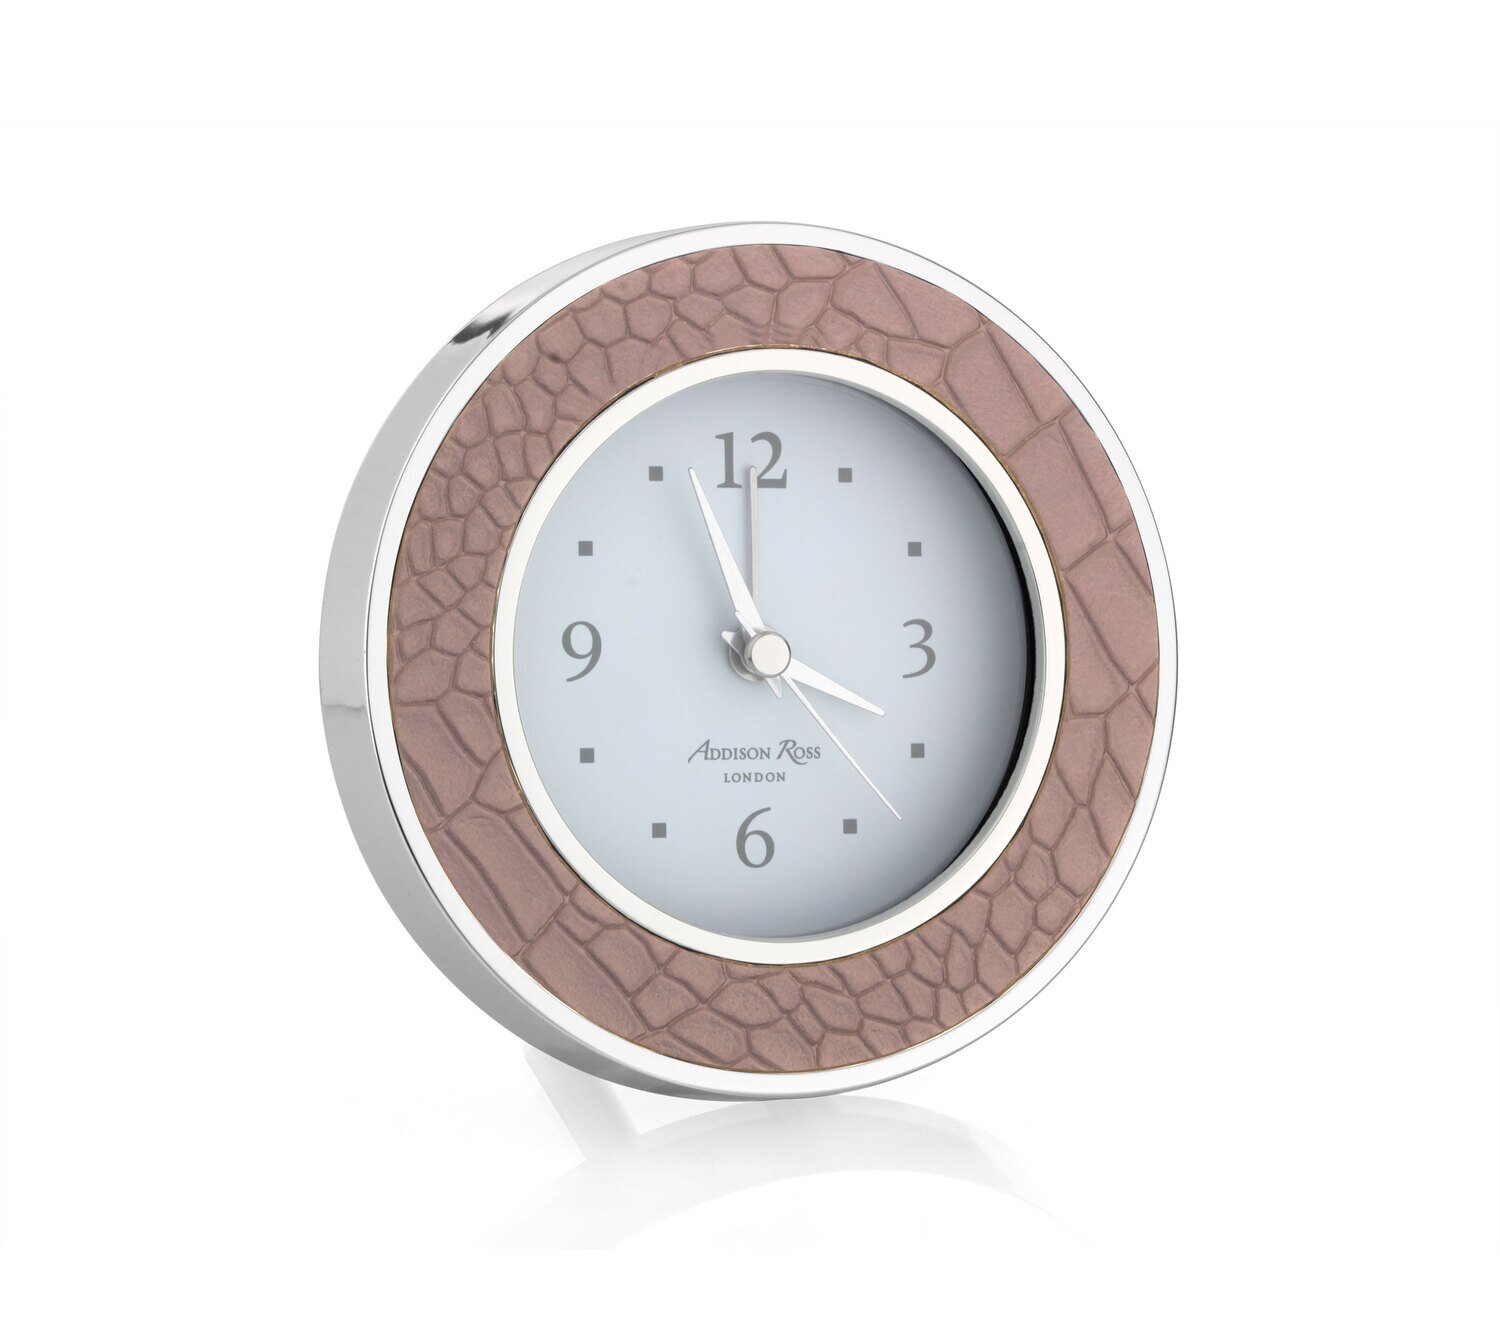 Addison Ross Black Croc Silver Silent Alarm Clock 4 x 4 InchSilver-plated FR5516